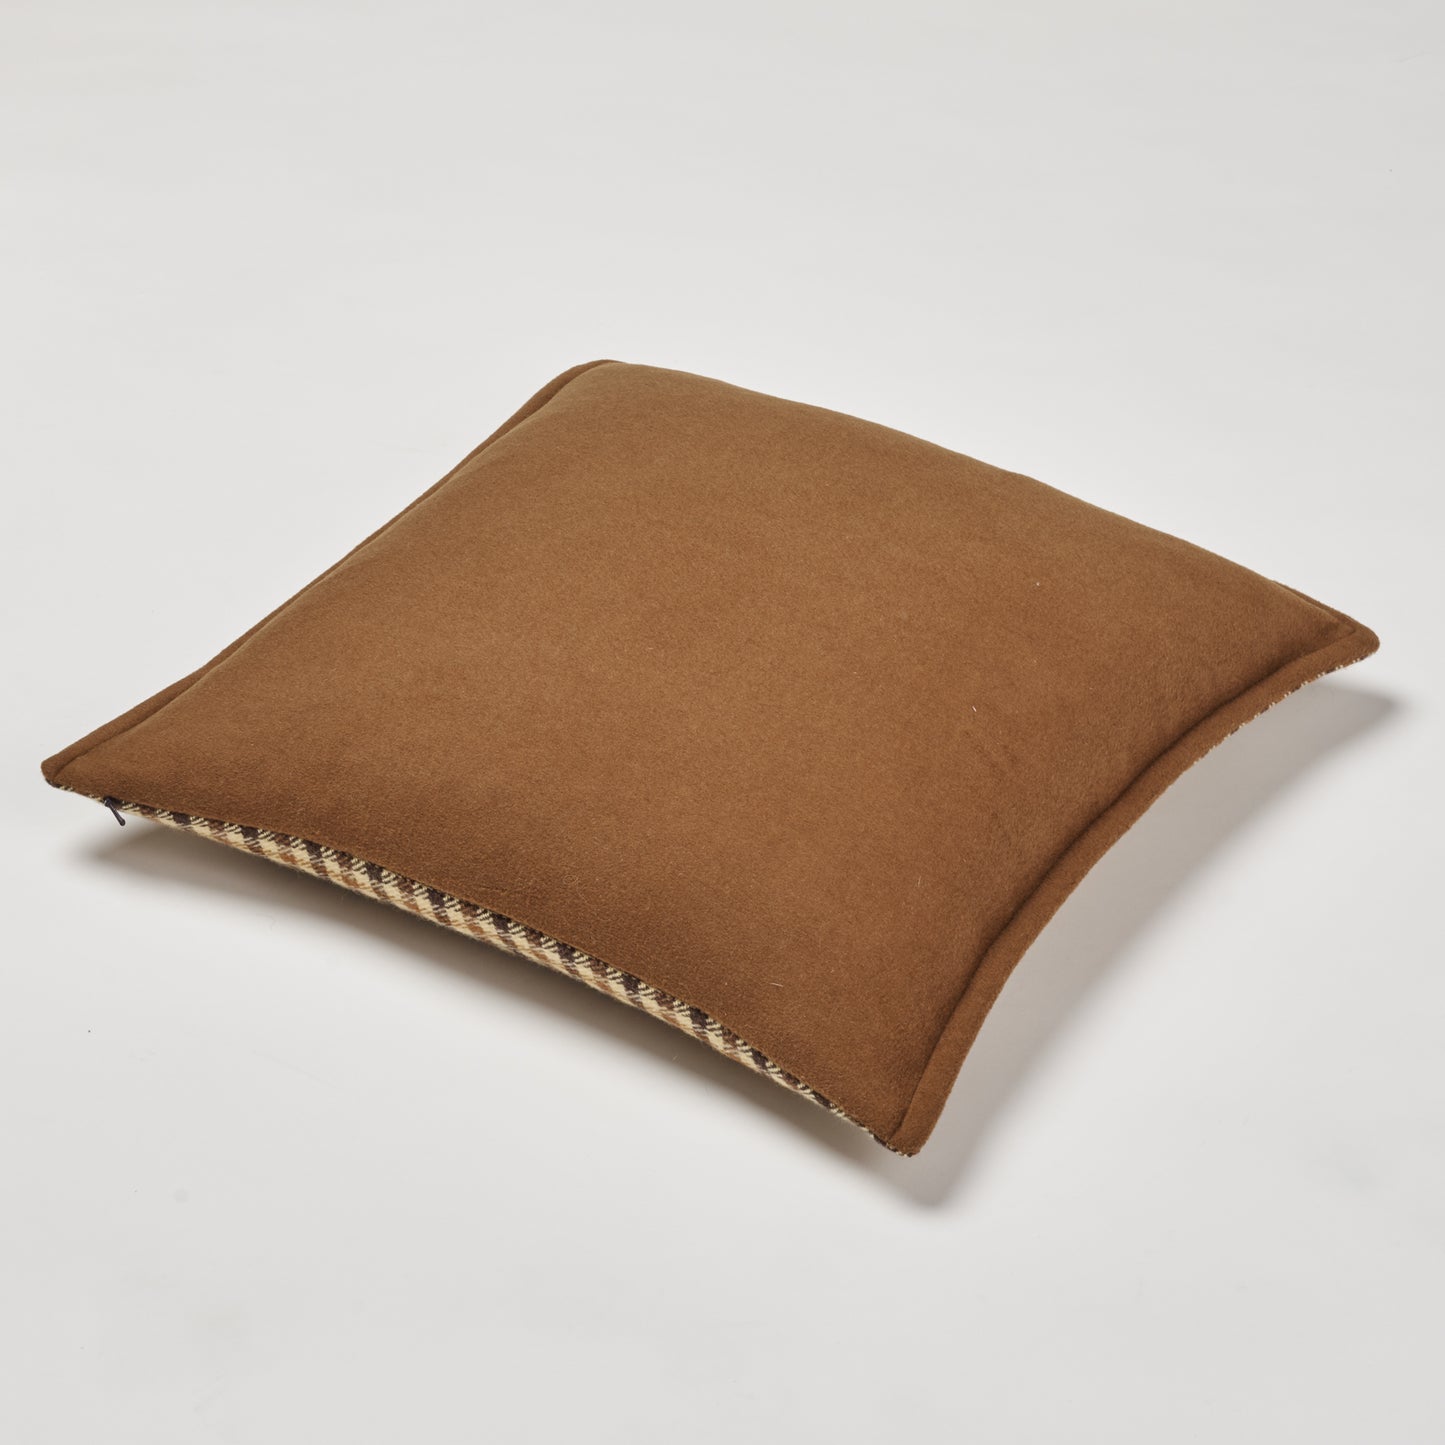 Rustic Pillow 20"x20"